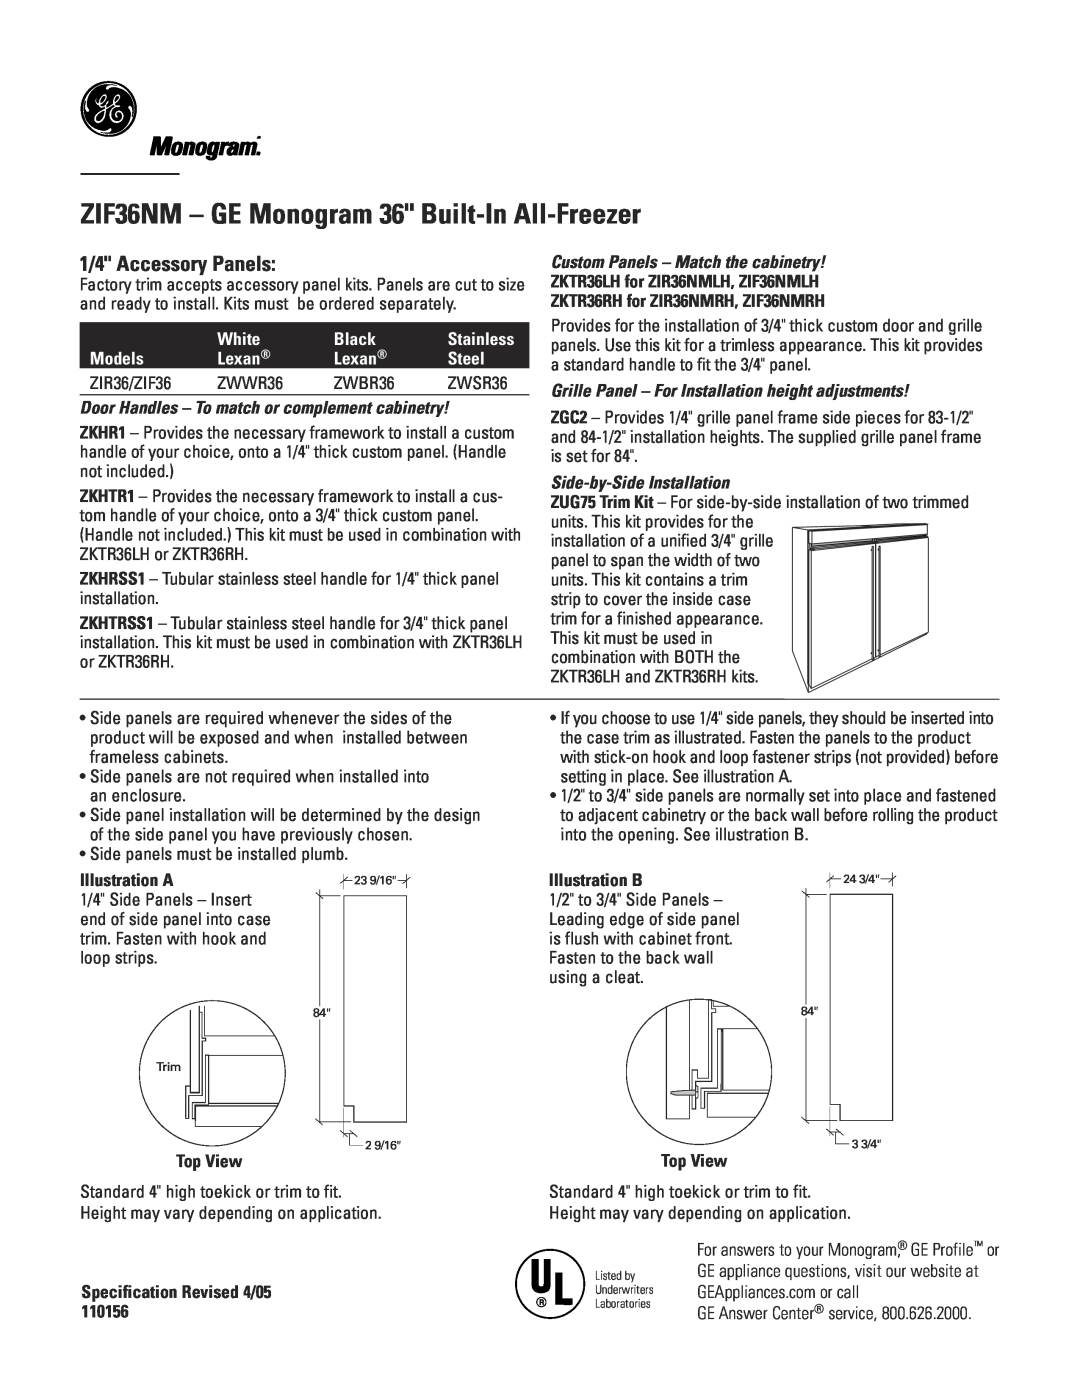 GE ZIF36NM - GE Monogram 36 Built-In All-Freezer, Monogram.“, 1/4 Accessory Panels, White, Black, Stainless, Models 